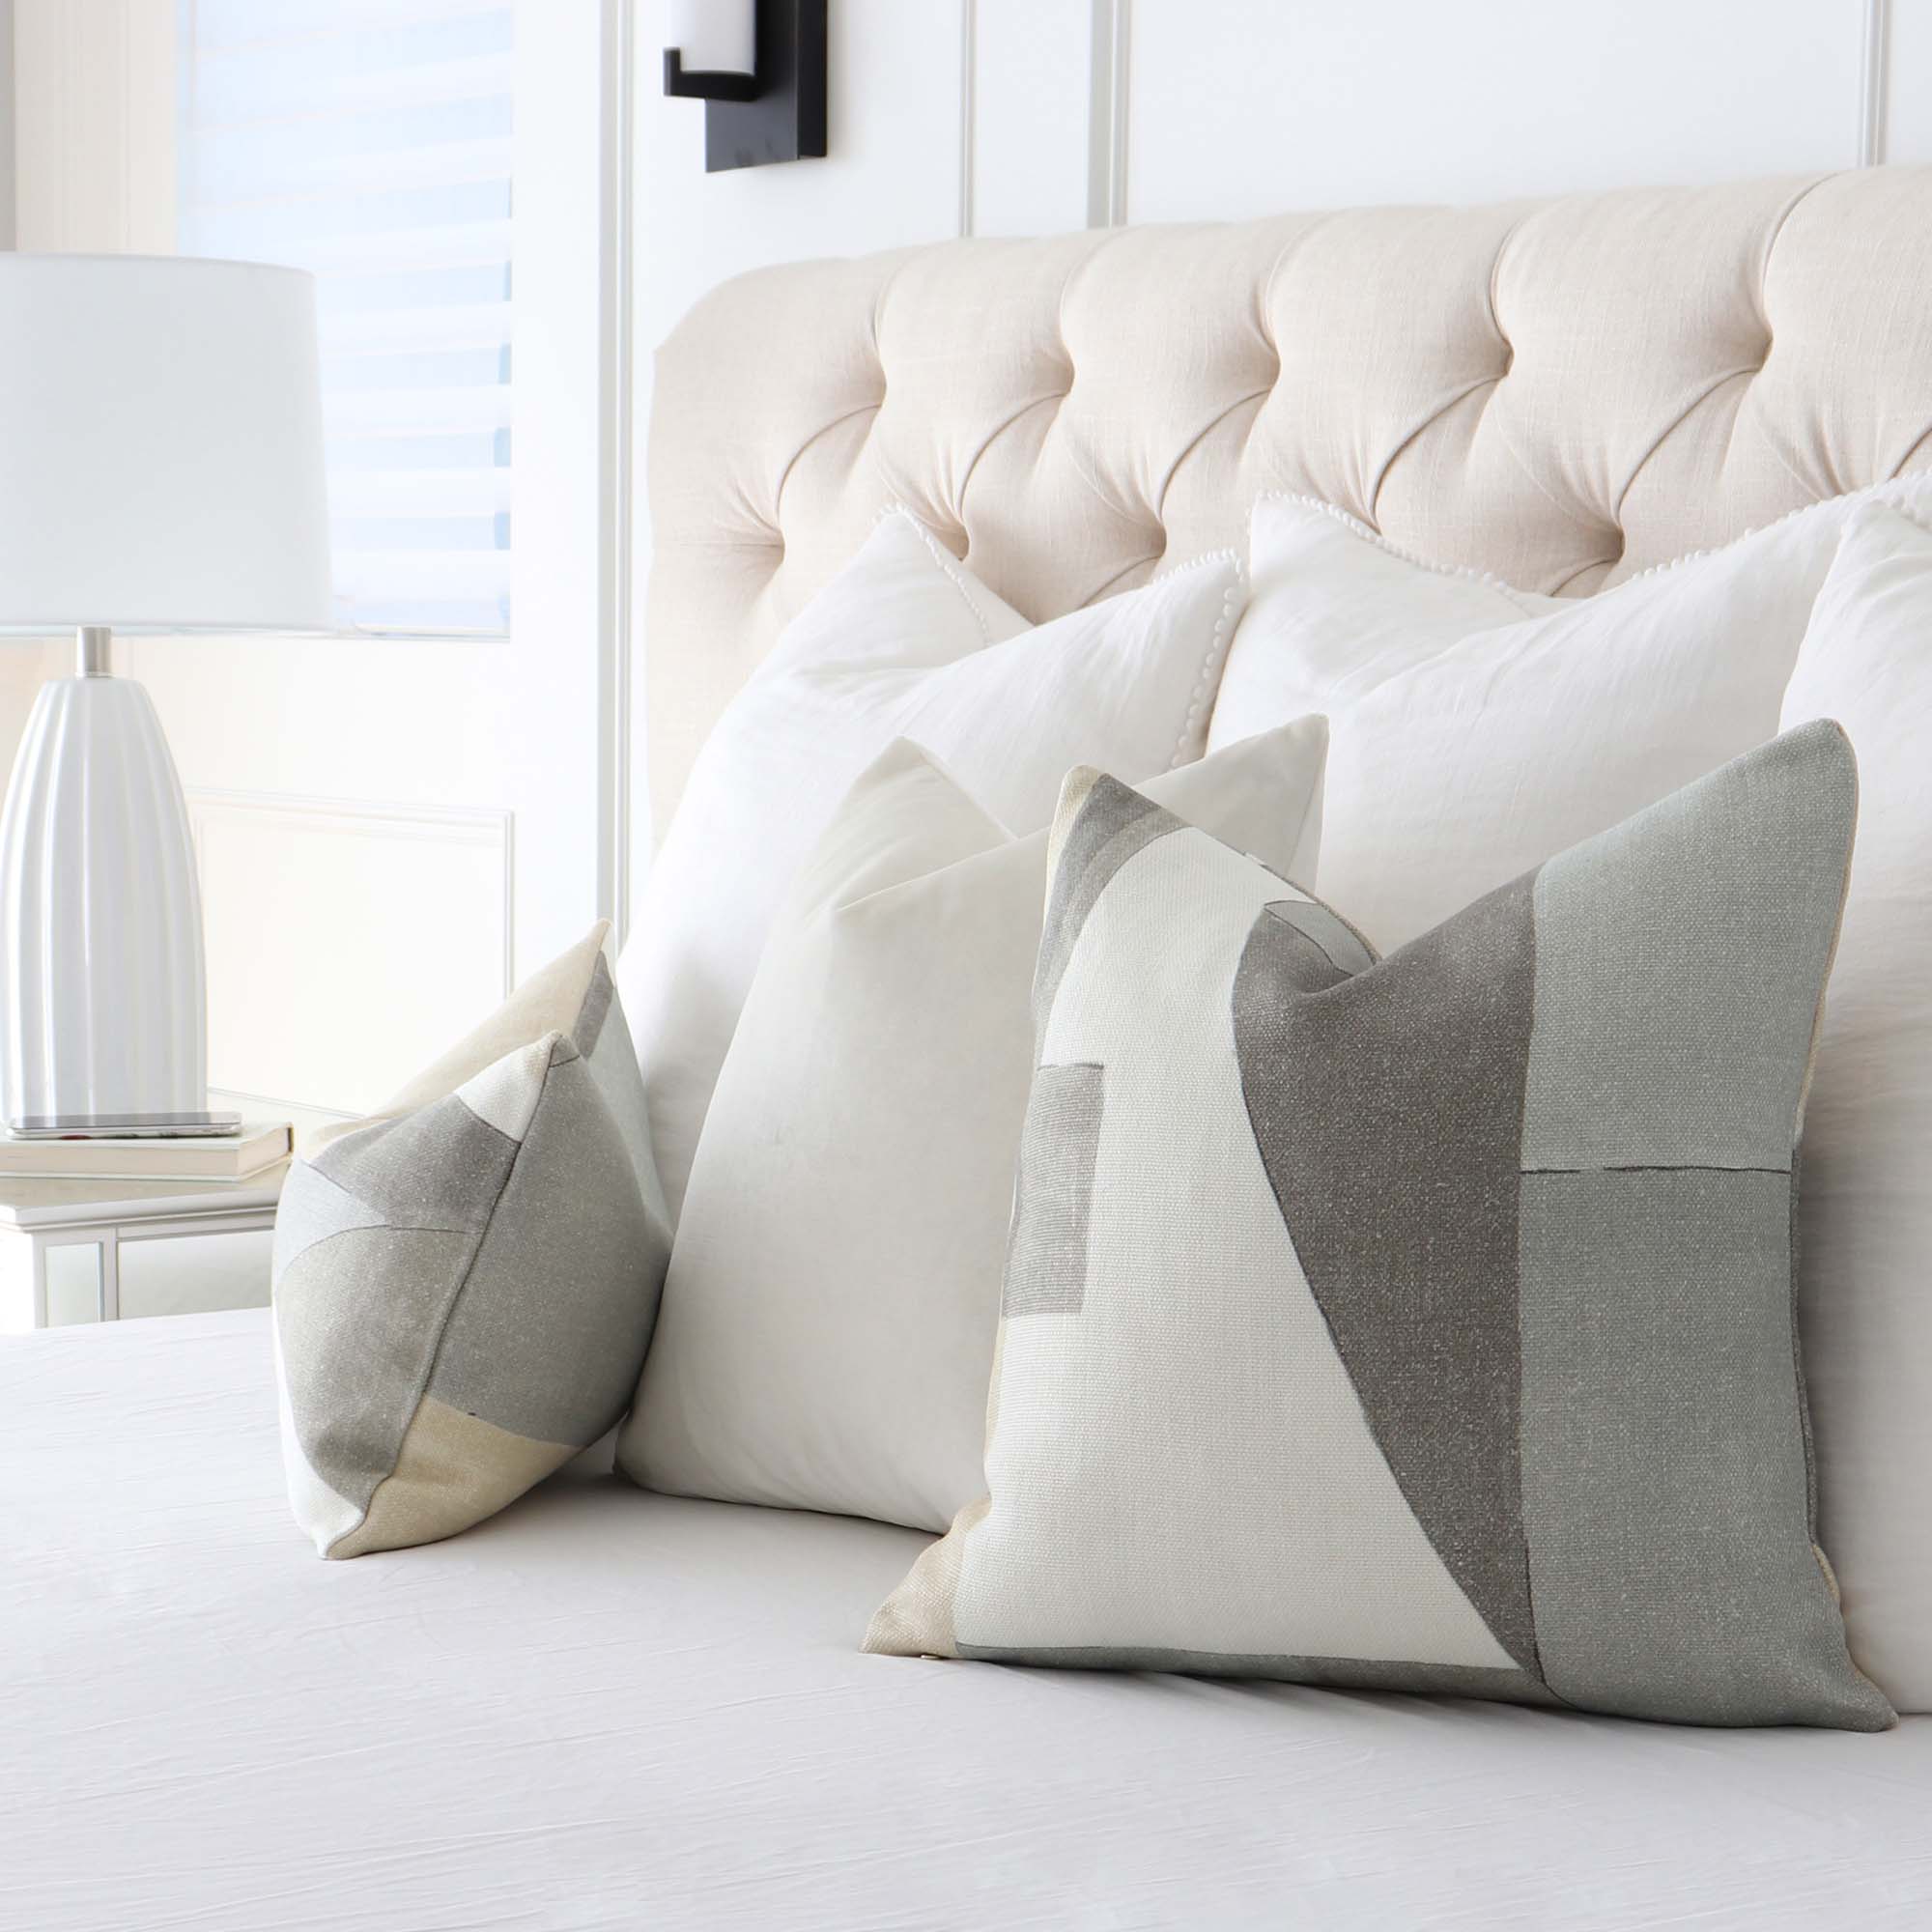 Kelly Wearstler District Alabaster Designer Luxury Decorative Throw Pillow Cover in Bedroom